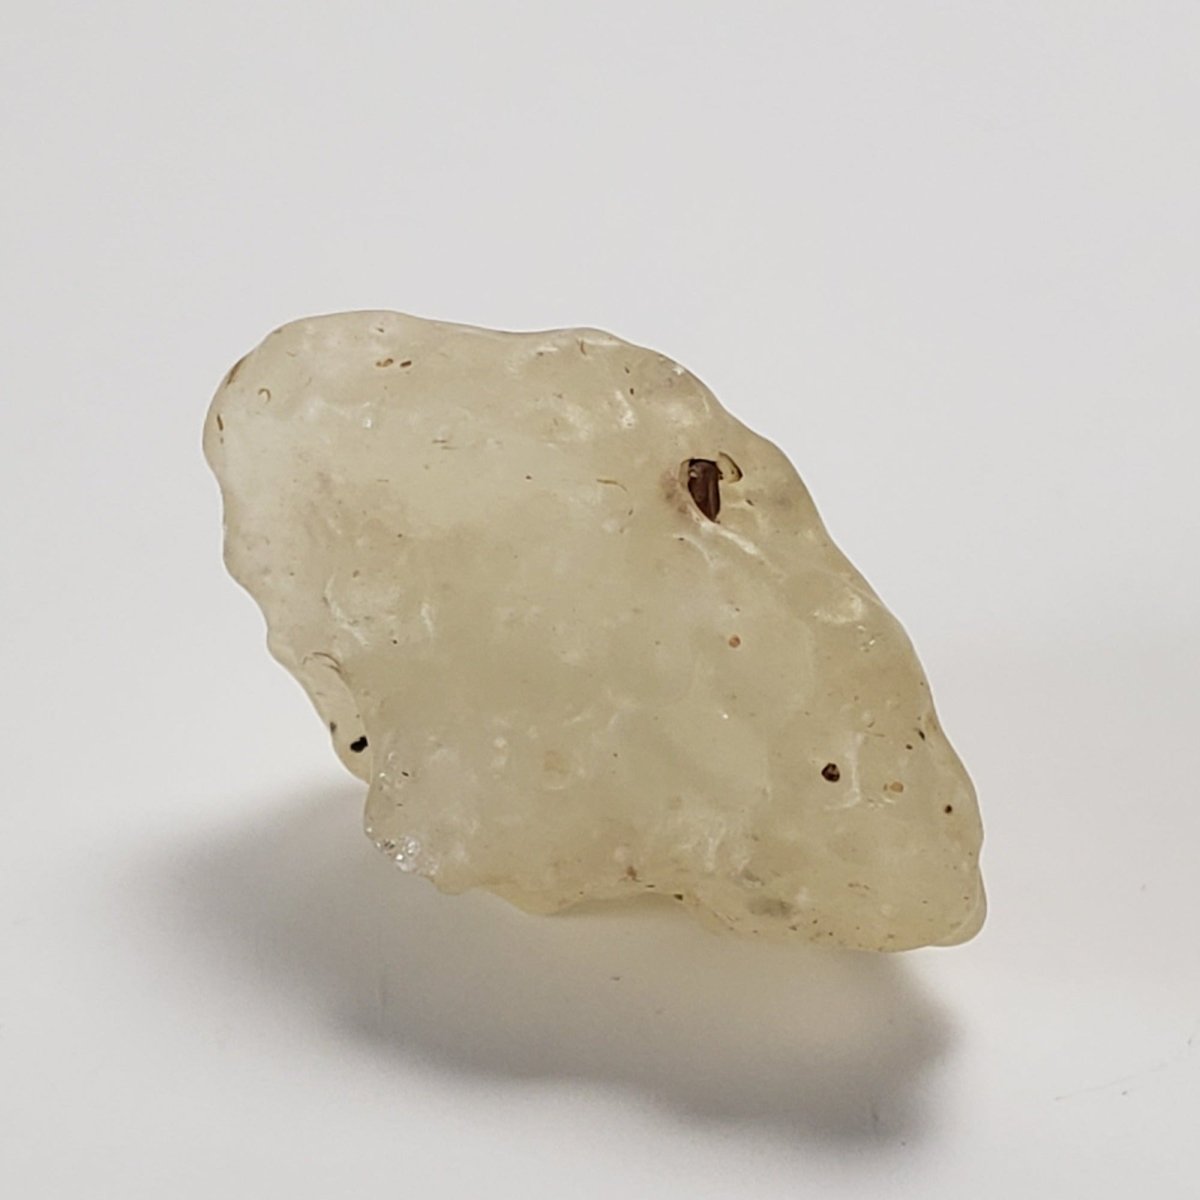 Libyan Desert Glass Tektite | 10.2 Grams | Authentic Impactite